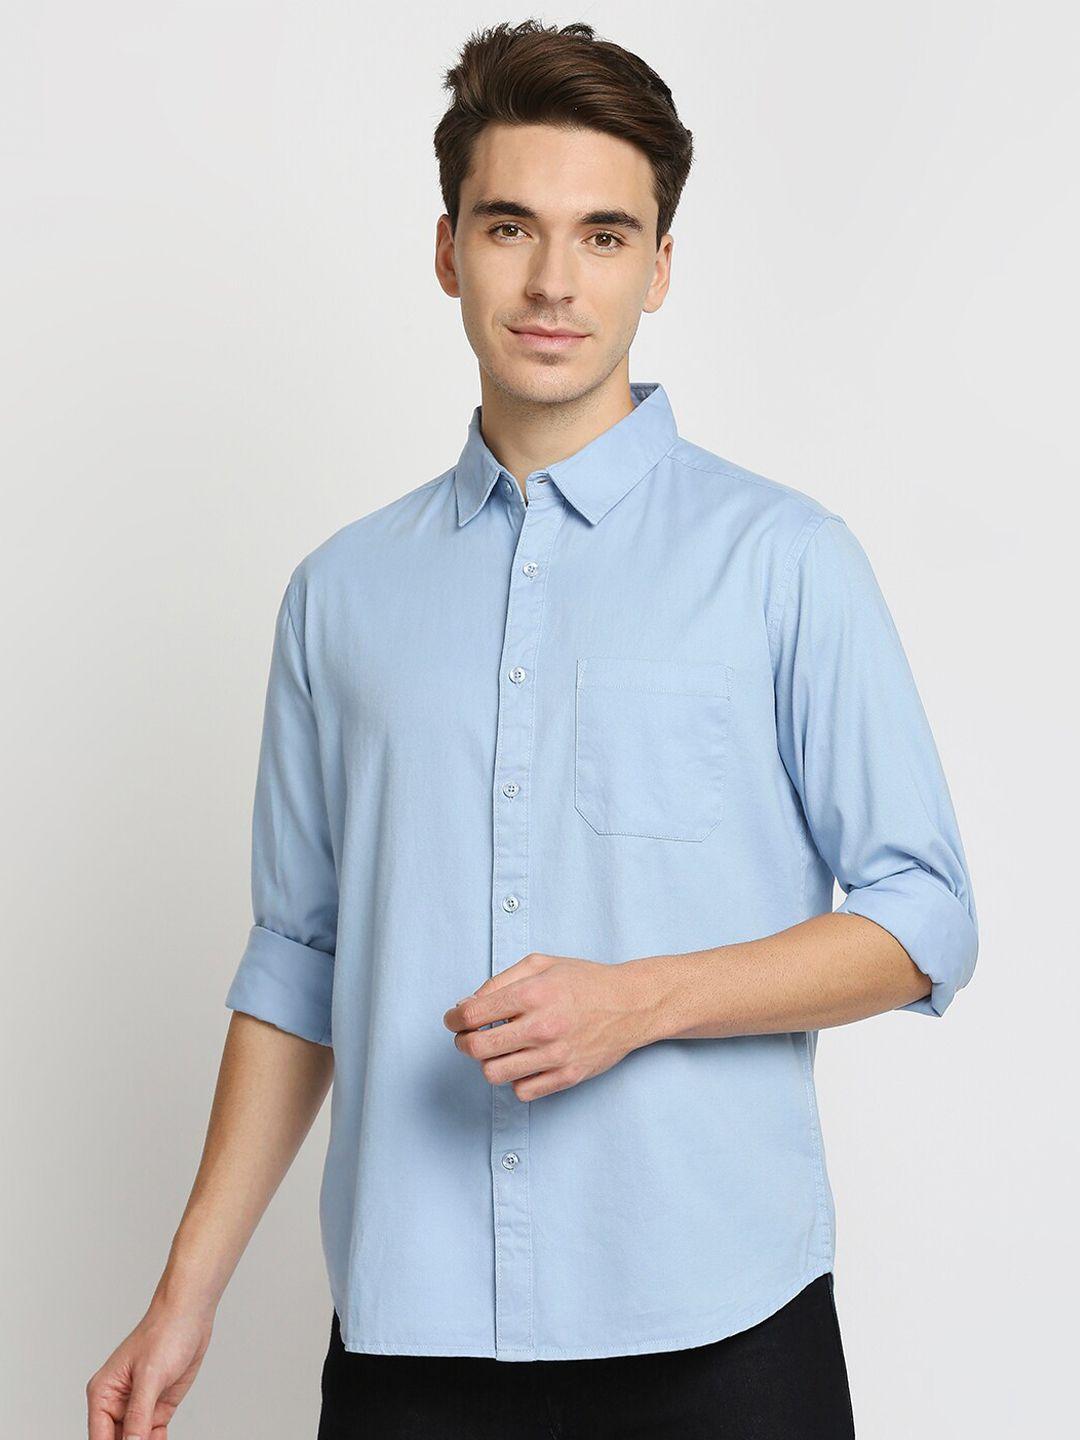 valen-club-men-blue-solid-pure-cotton-slim-fit-casual-shirt